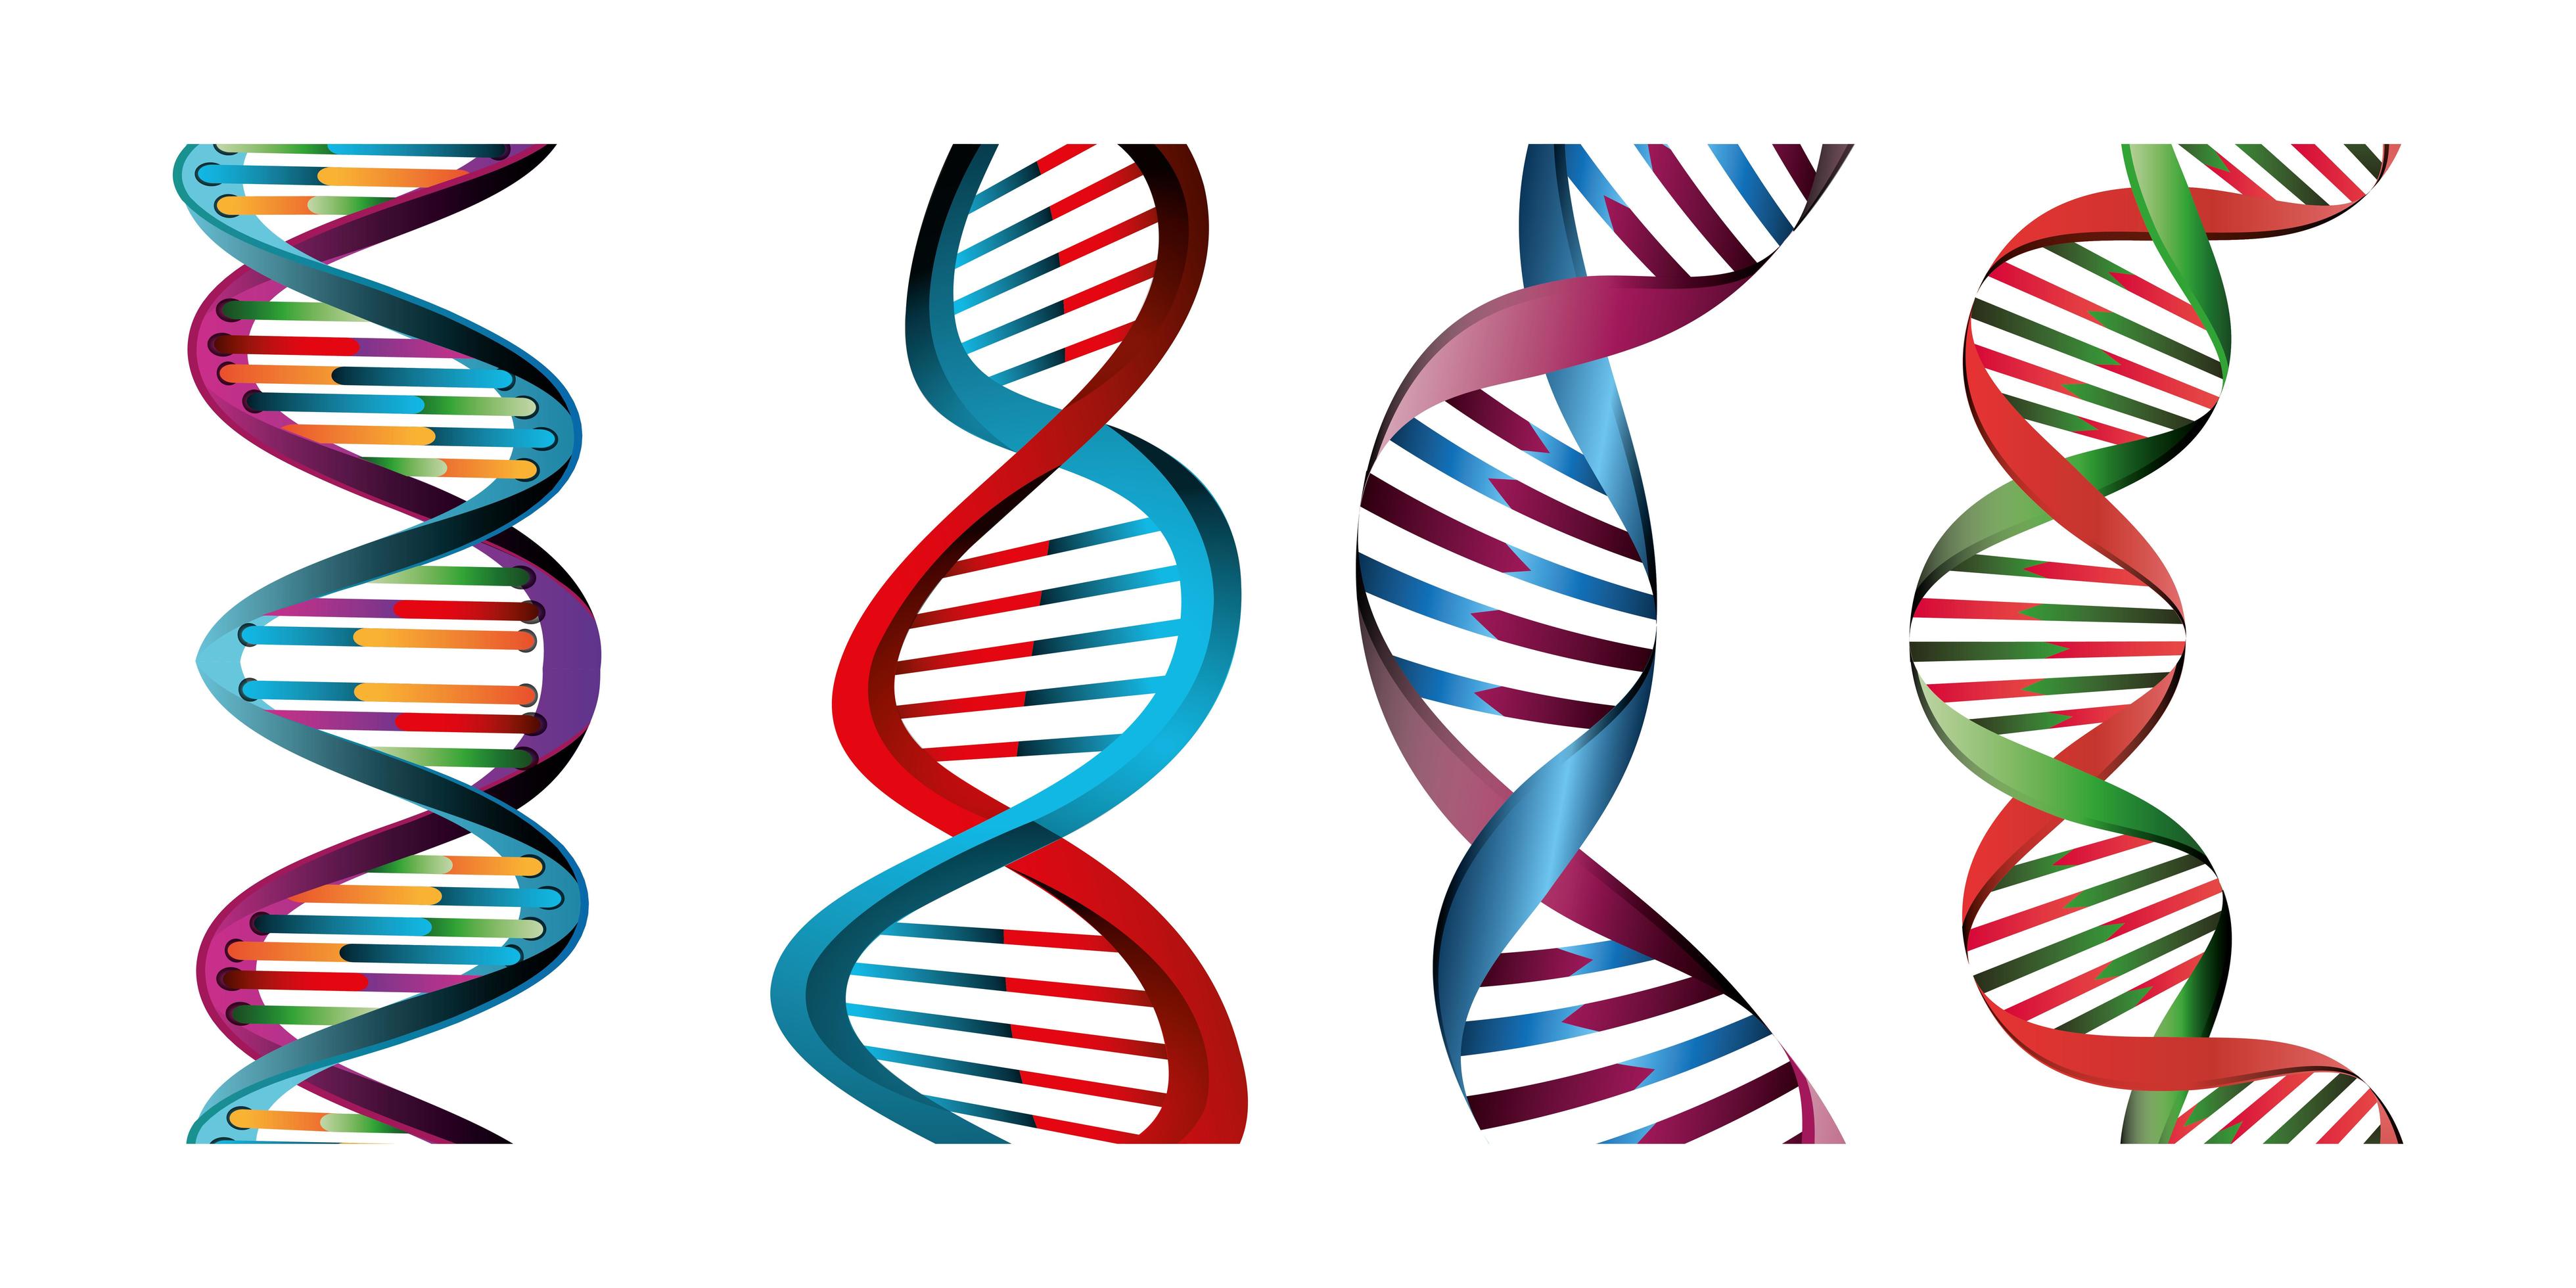 ДНК символ. Спираль ДНК на прозрачном фоне. DNA fb bg.